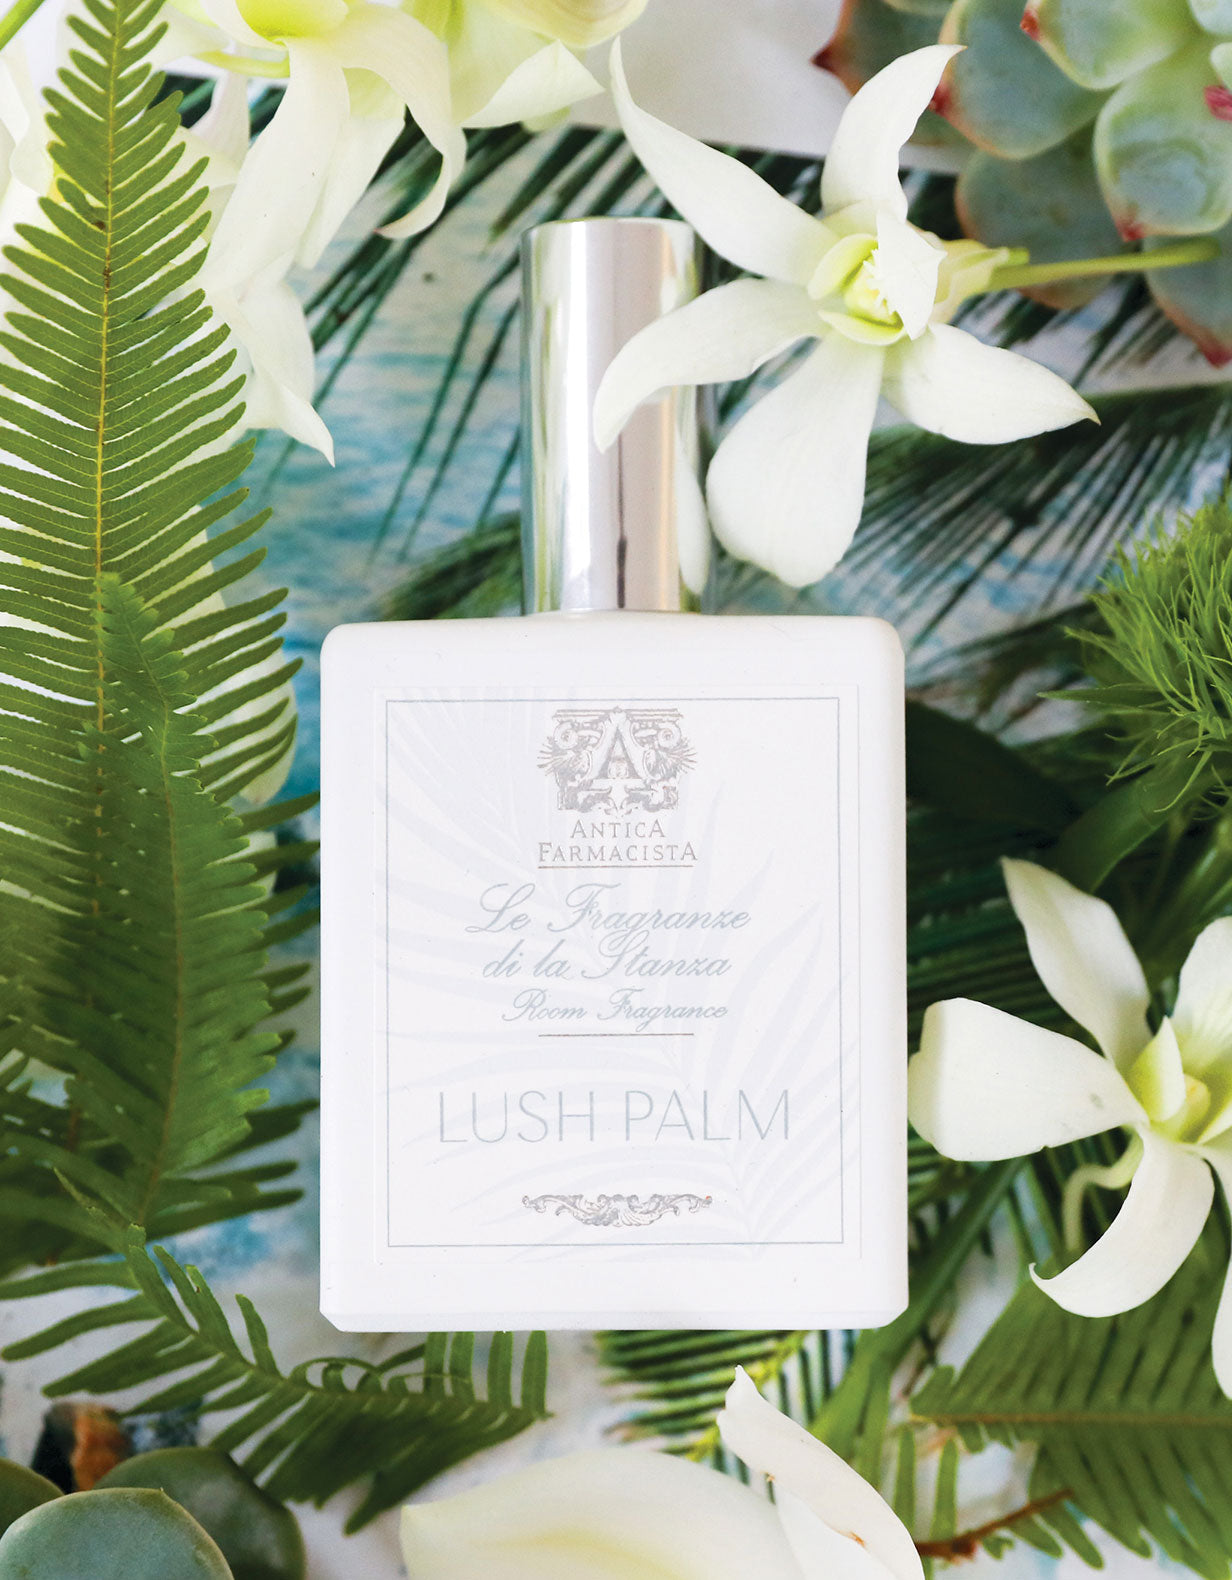 Lush Palm Room Spray